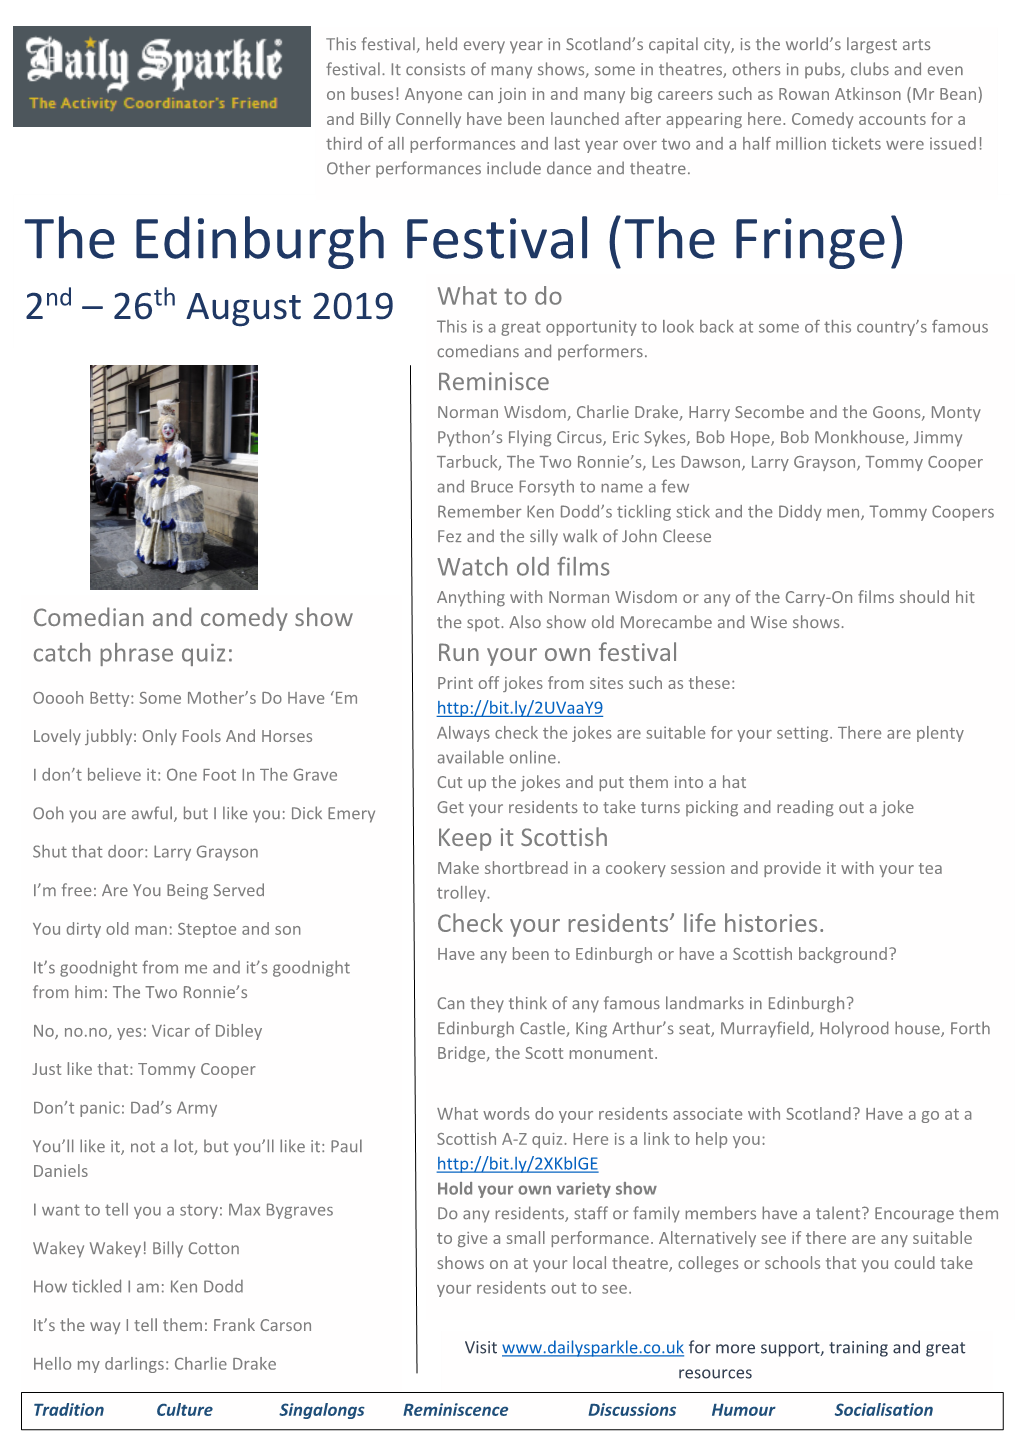 The Edingburgh Festival